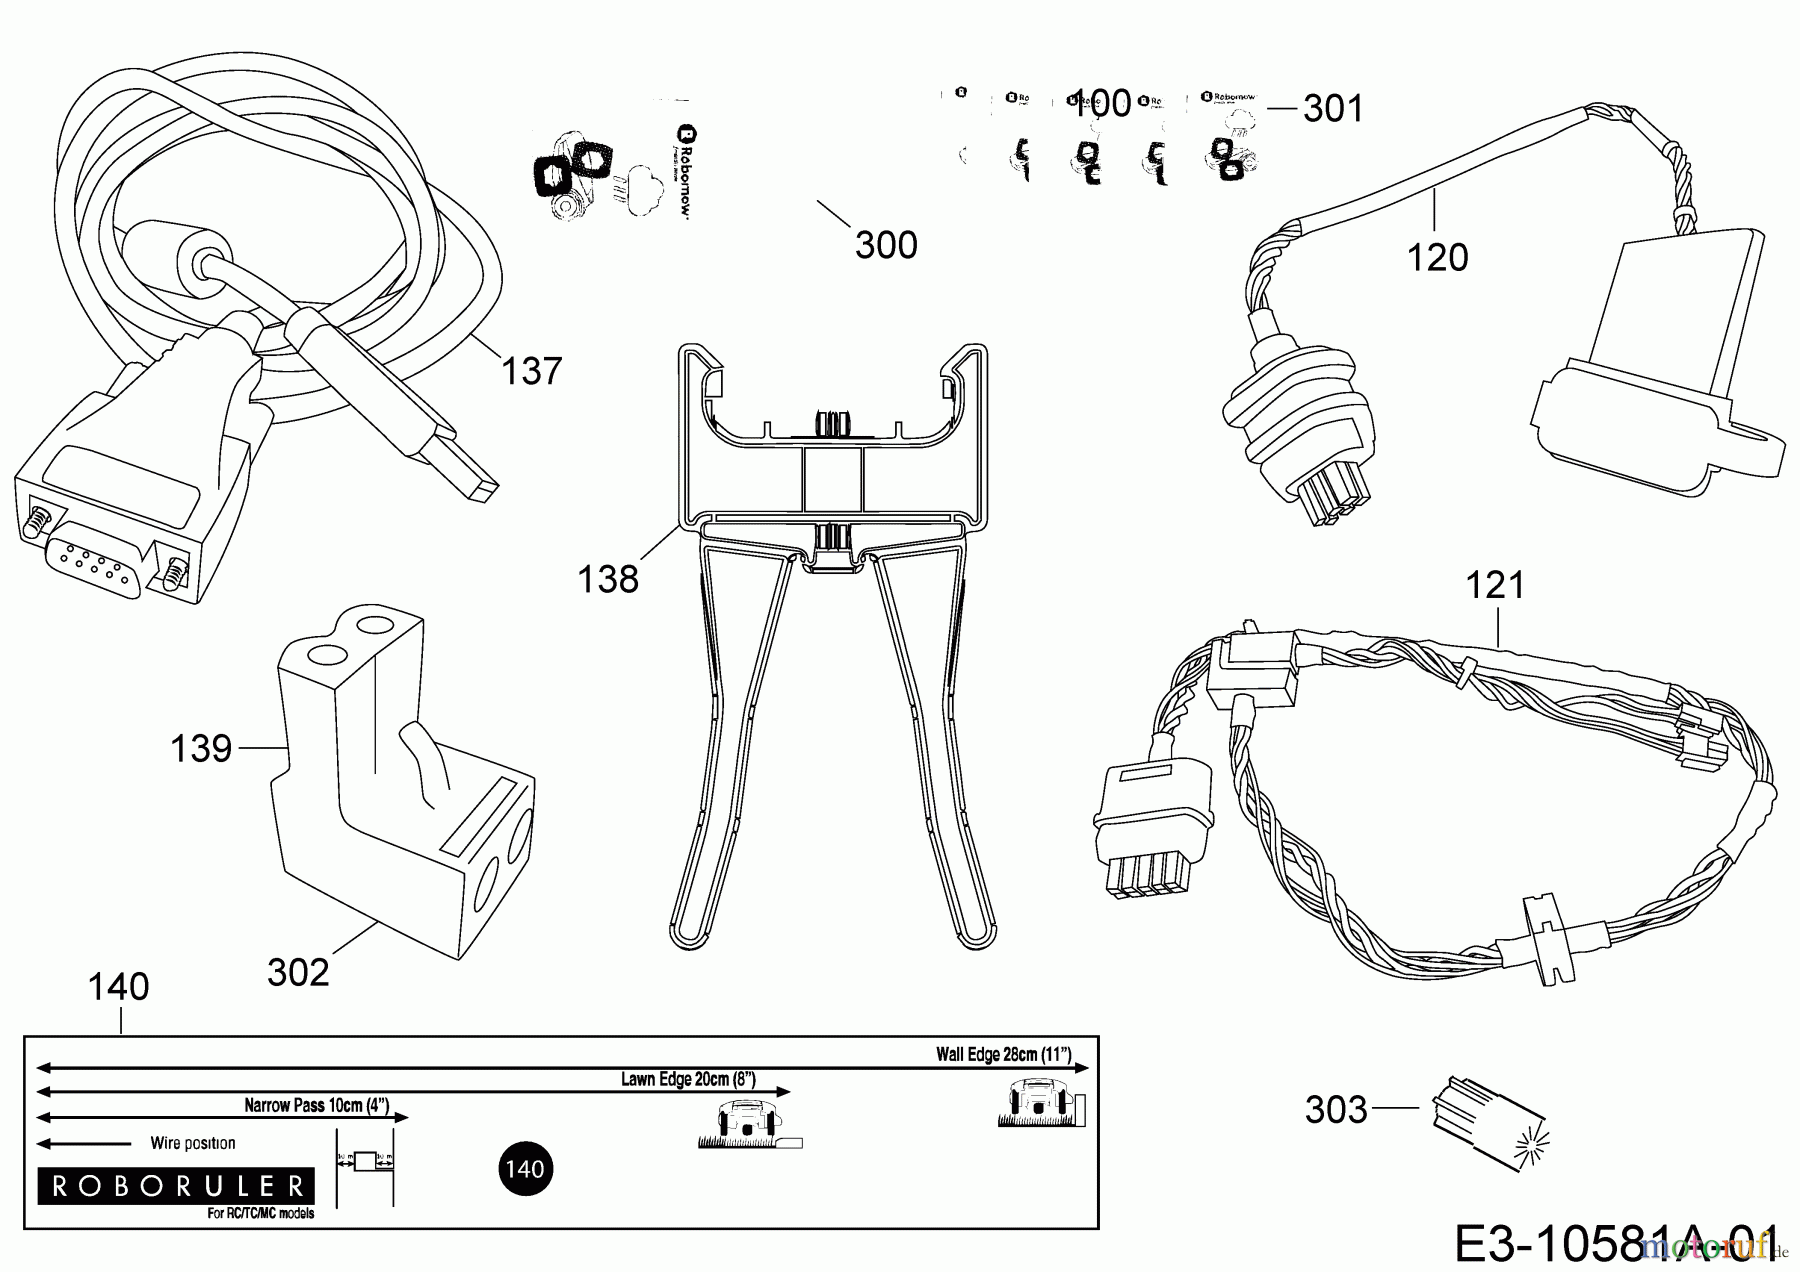  Robomow Mähroboter RC304 PRD7004A  (2014) Kabel, Kabelanschluß, Regensensor, Werkzeug